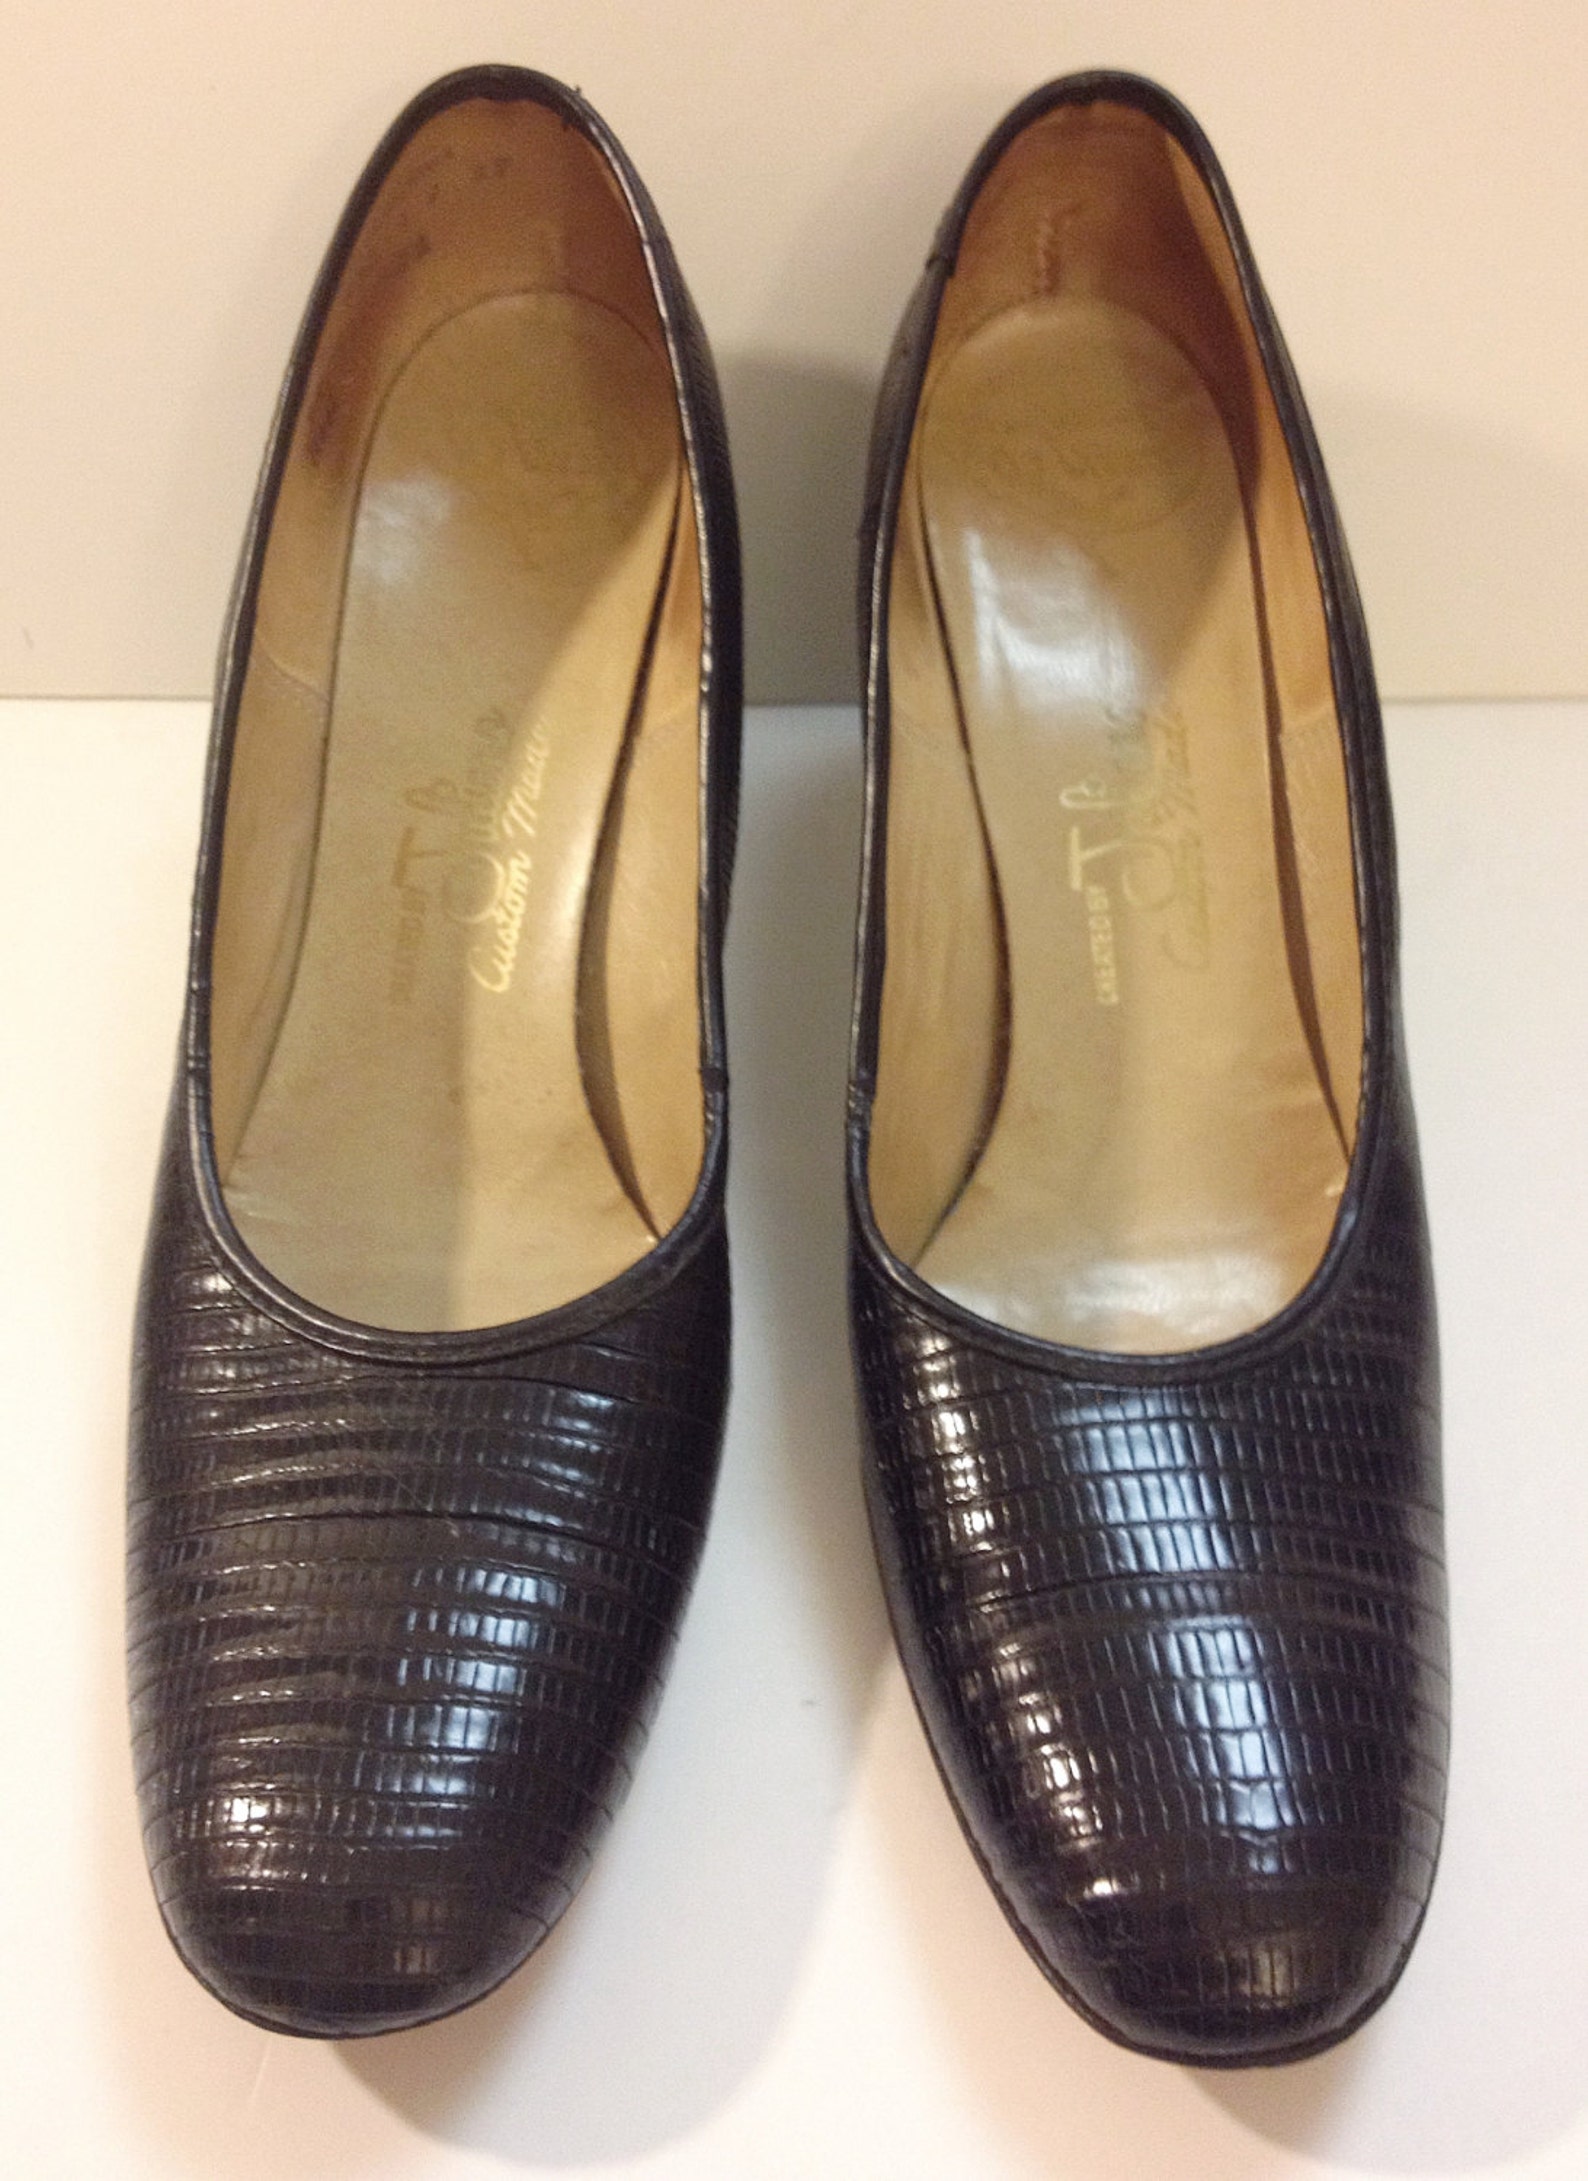 Vintage Alligator Shoes 60s Juliano Black Lizard Pumps Retro | Etsy